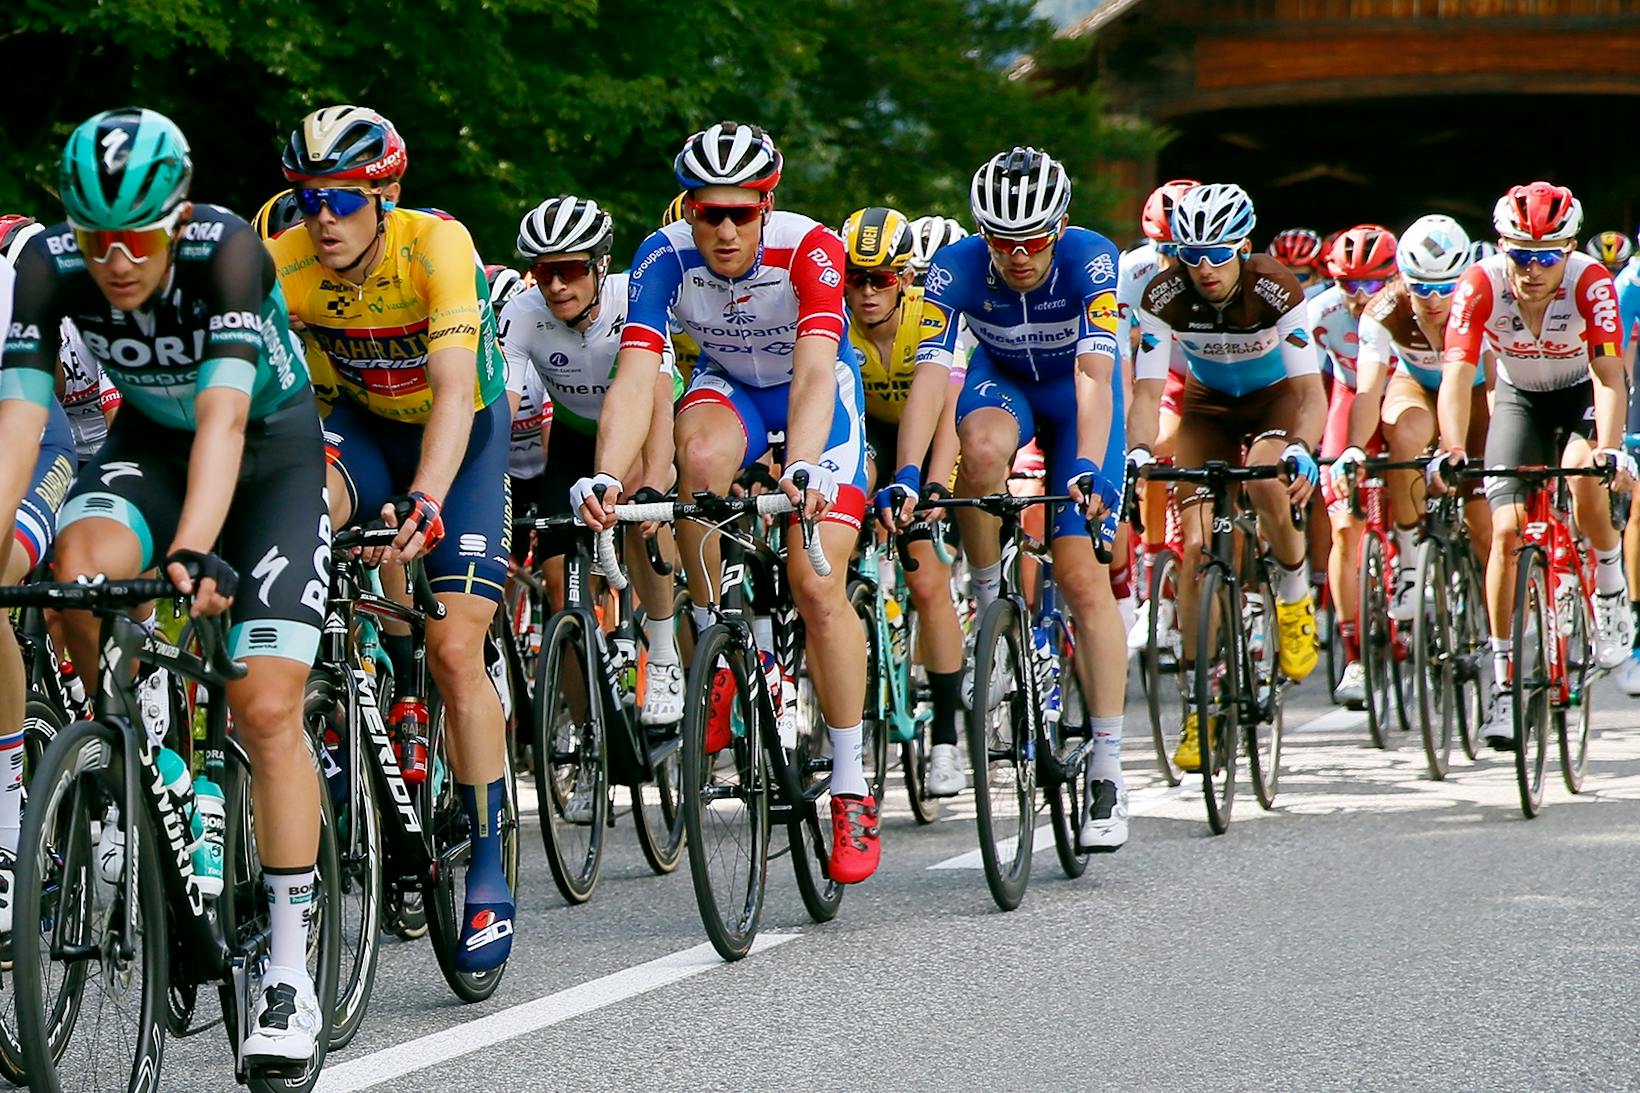 The lack of women's Tour de France proves sexism in sports